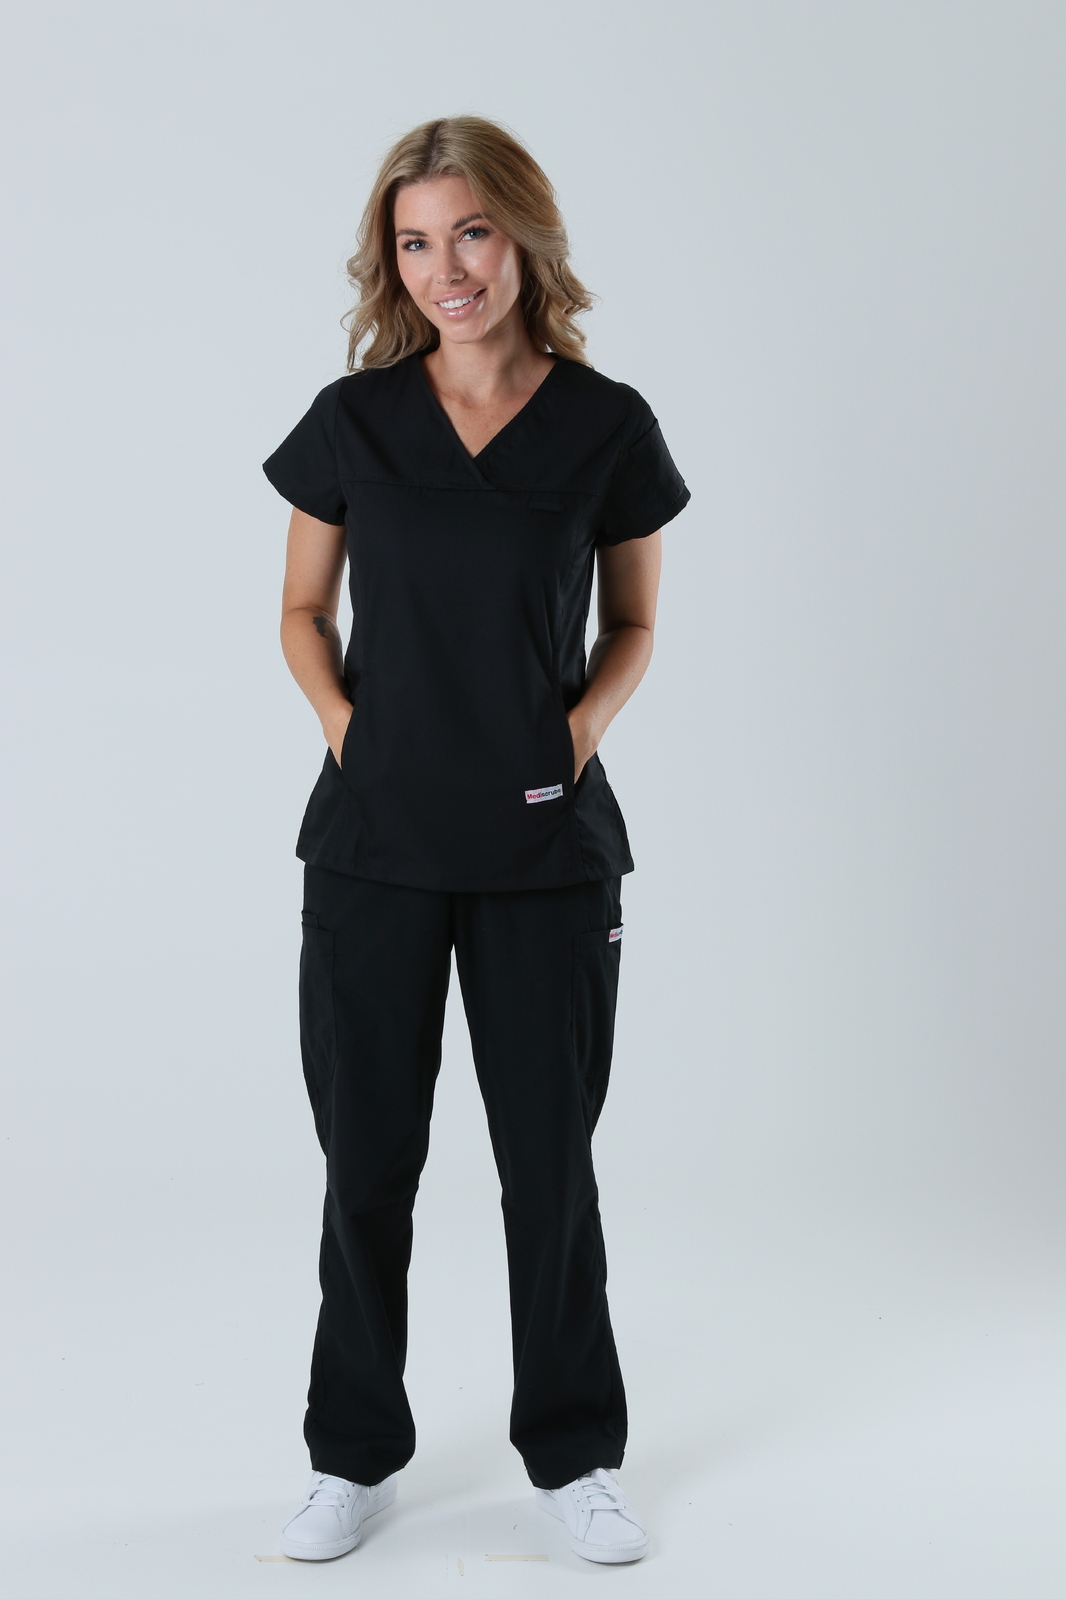 Canberra Hospital Medical Imaging Doctor Uniform Set Bundle (Women's Fit Solid Top and Cargo Pants in Black + Logos)